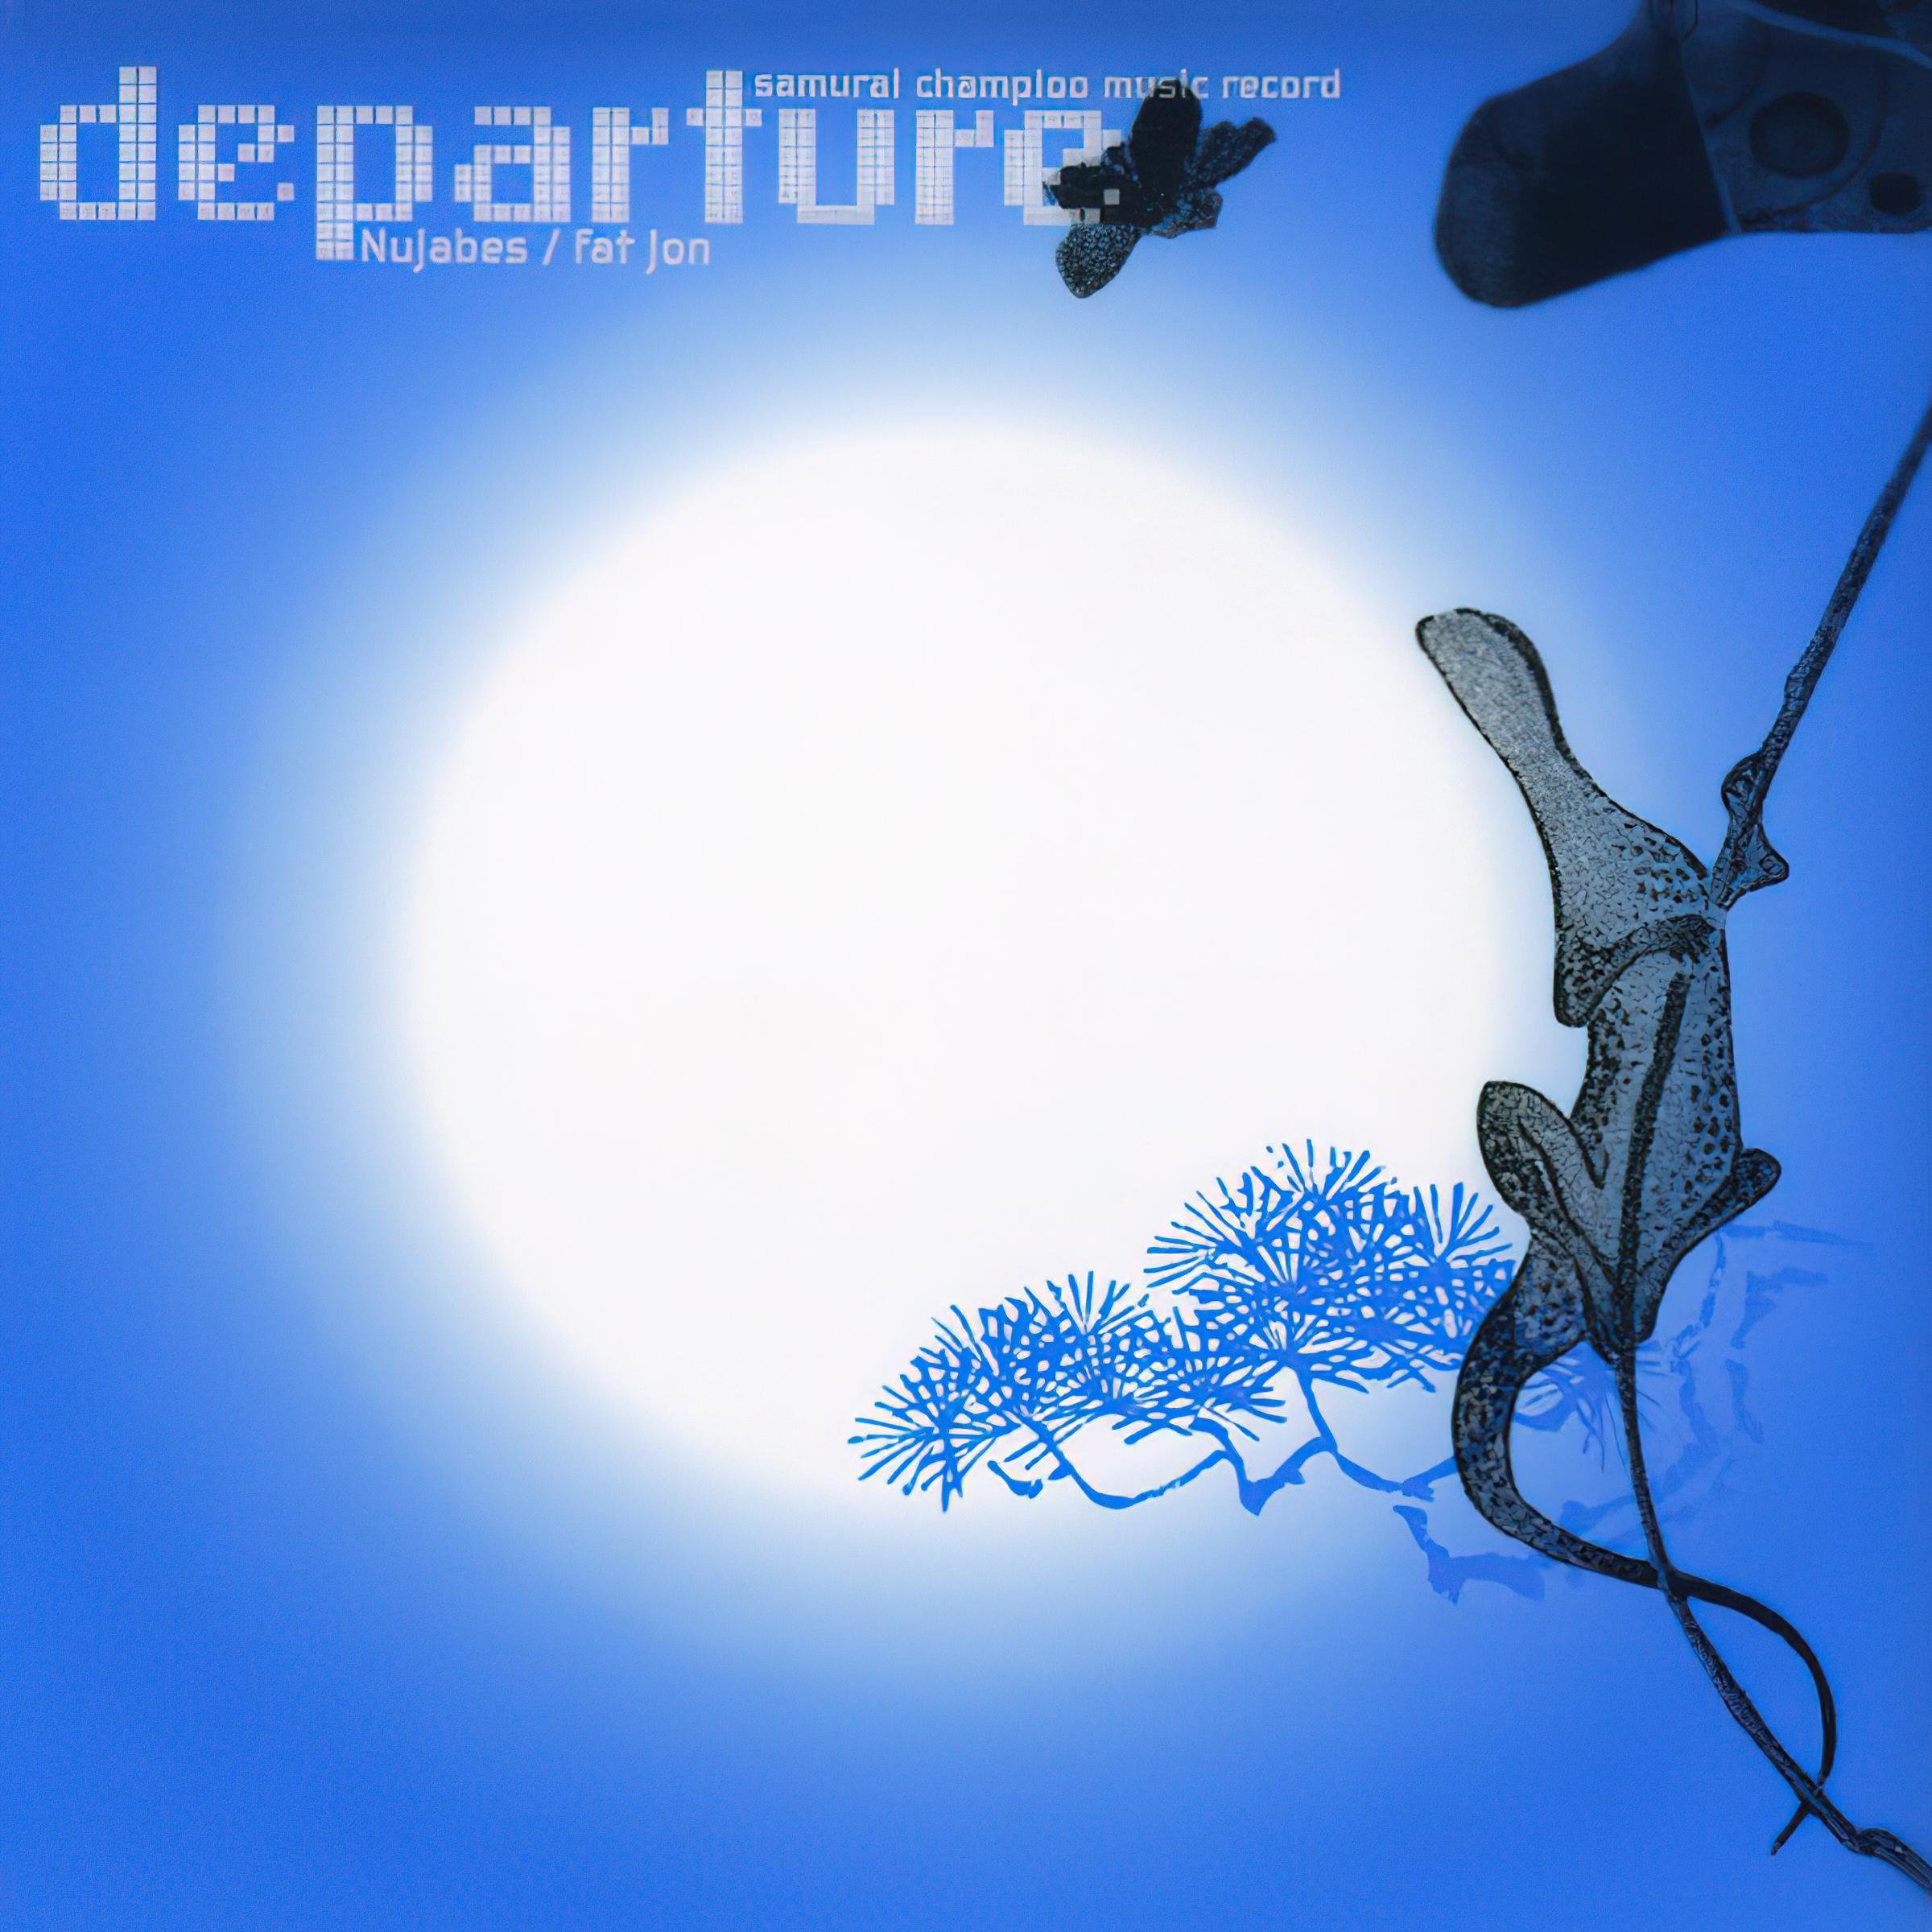 Nujabes / Fat Jon - Samurai Champloo Music Record: Departure 